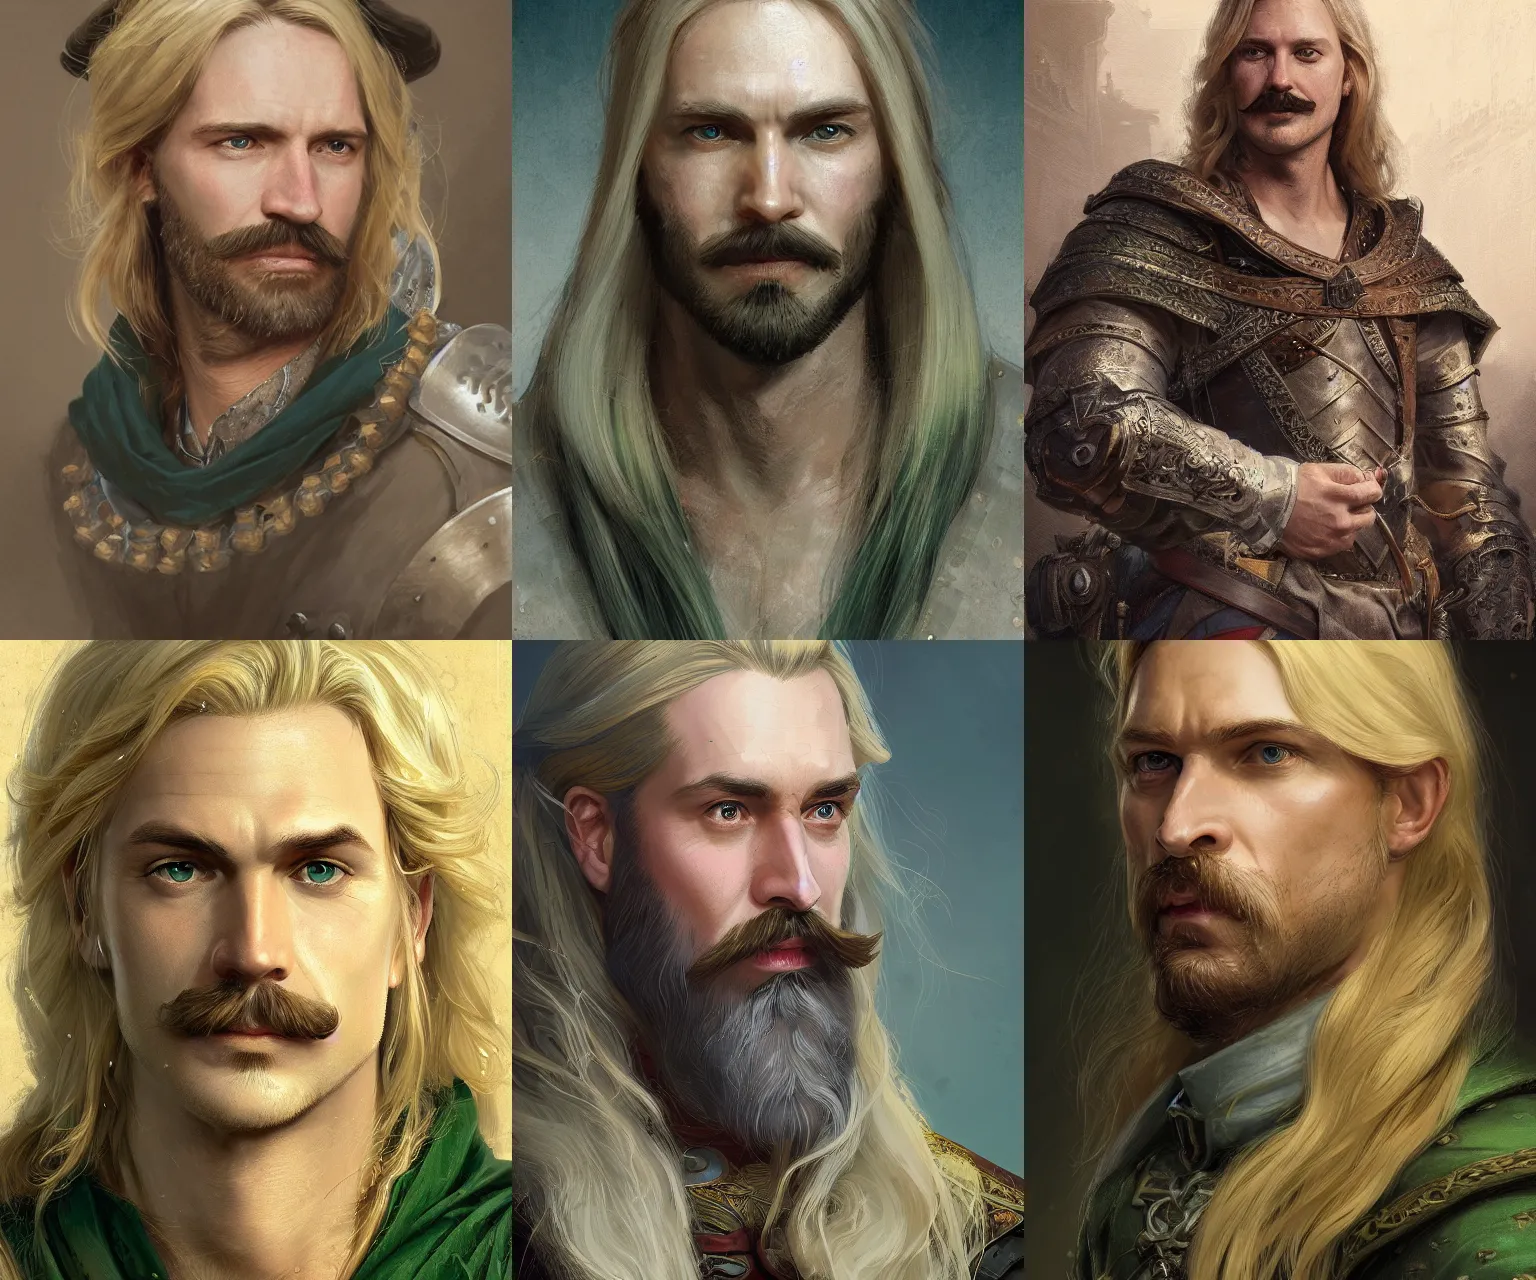 Celtic Druid - Male Vikings - Fantasy Collection – Yarrawah